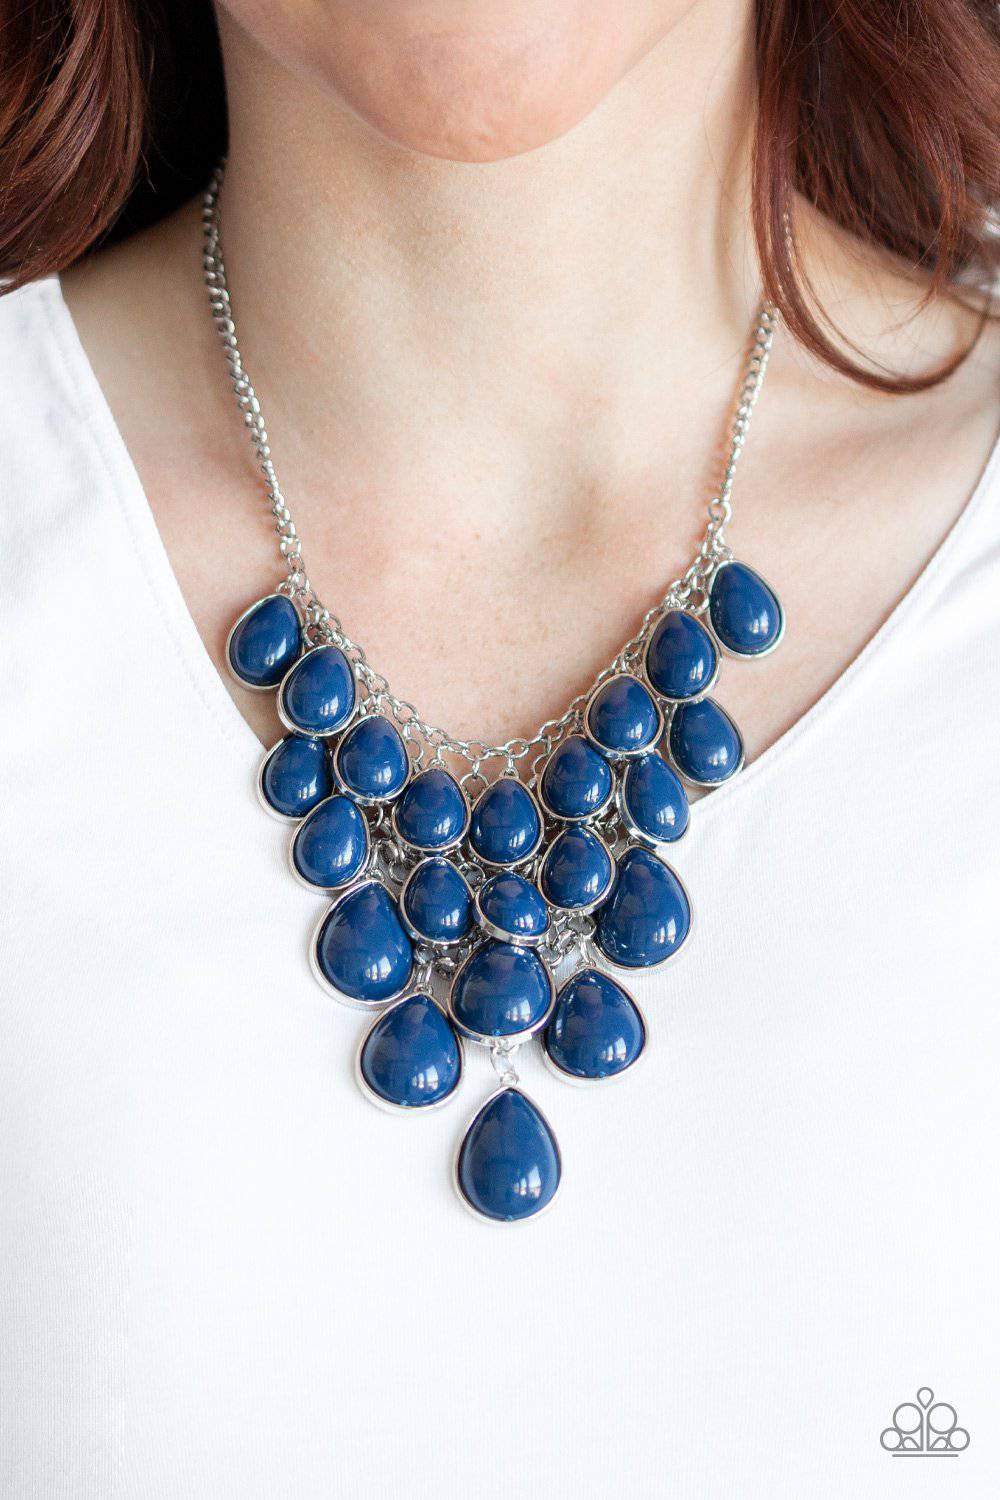 Shop Til You TEARDROP - Evening Blue Necklace - Paparazzi Accessories - GlaMarous Titi Jewels